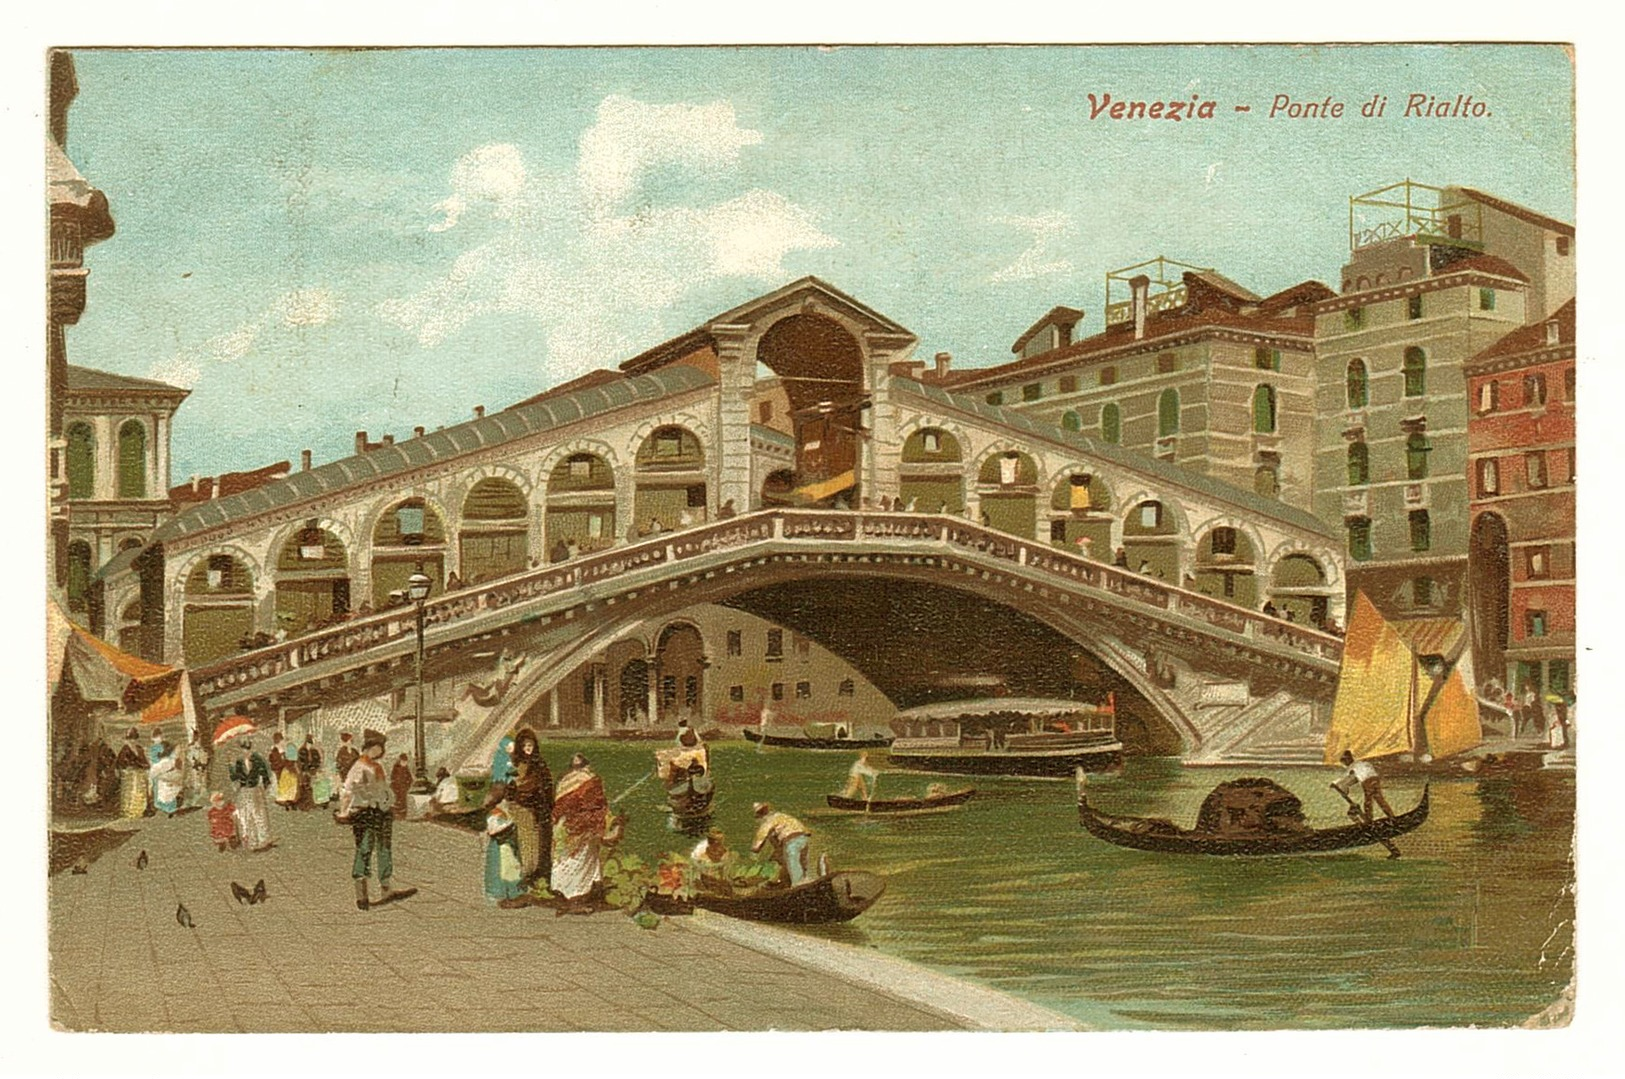 Italian Guest House Boarding Accomodation Cinderalla Stamp PENSION INTERNATIONALE VENICE, (1928?) On Postcard To USA - Cinderellas